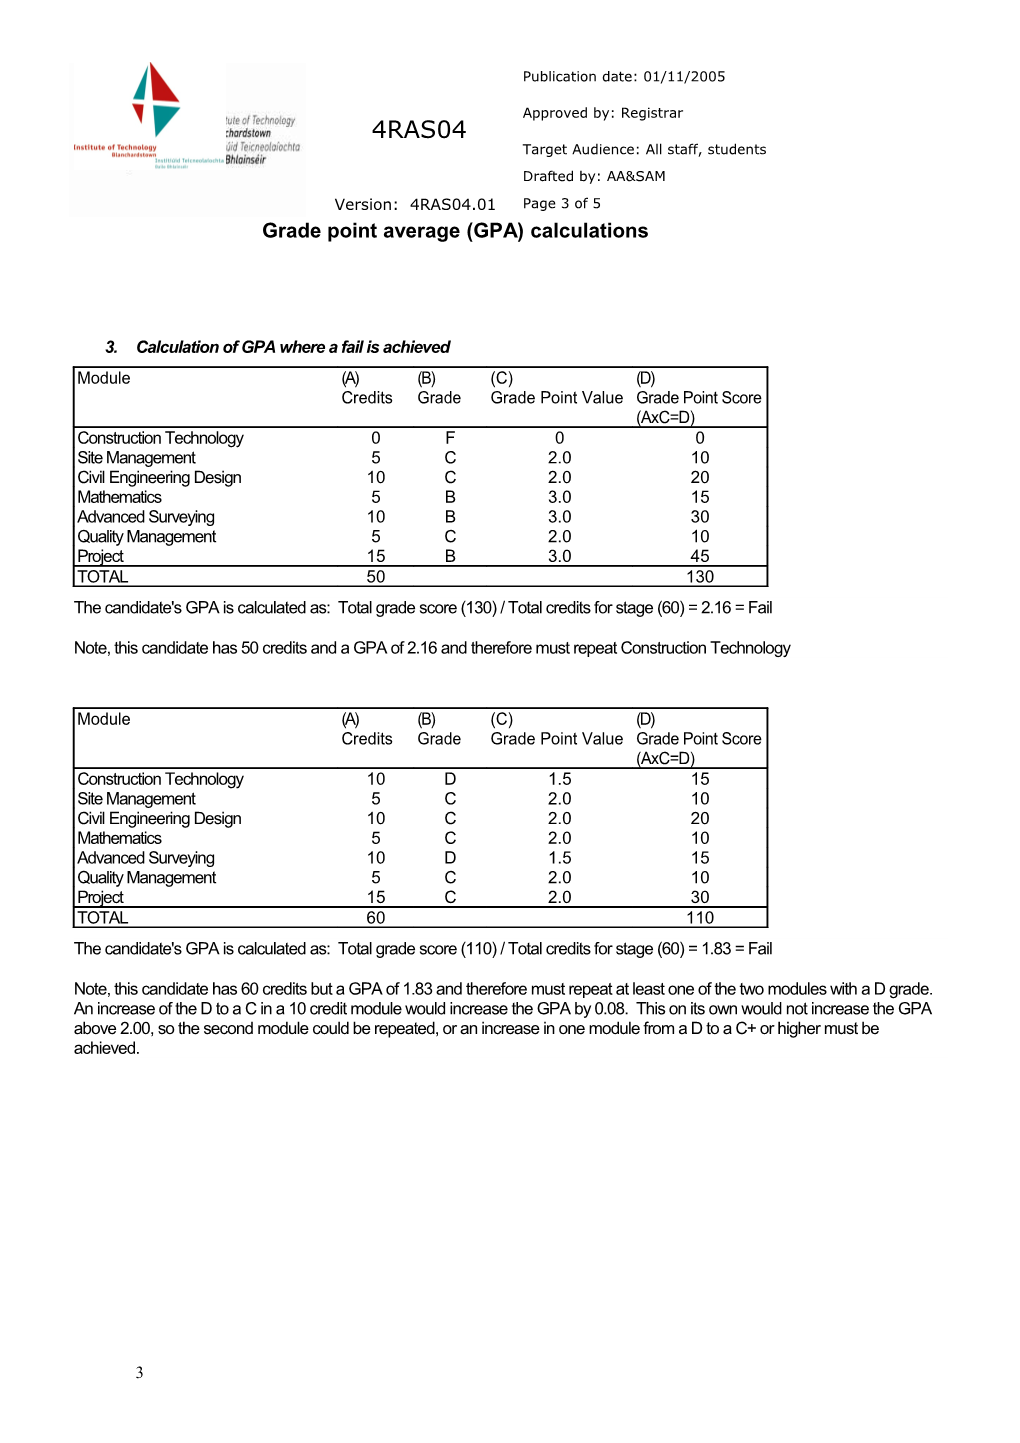 Grade Point Average (GPA) Calculations